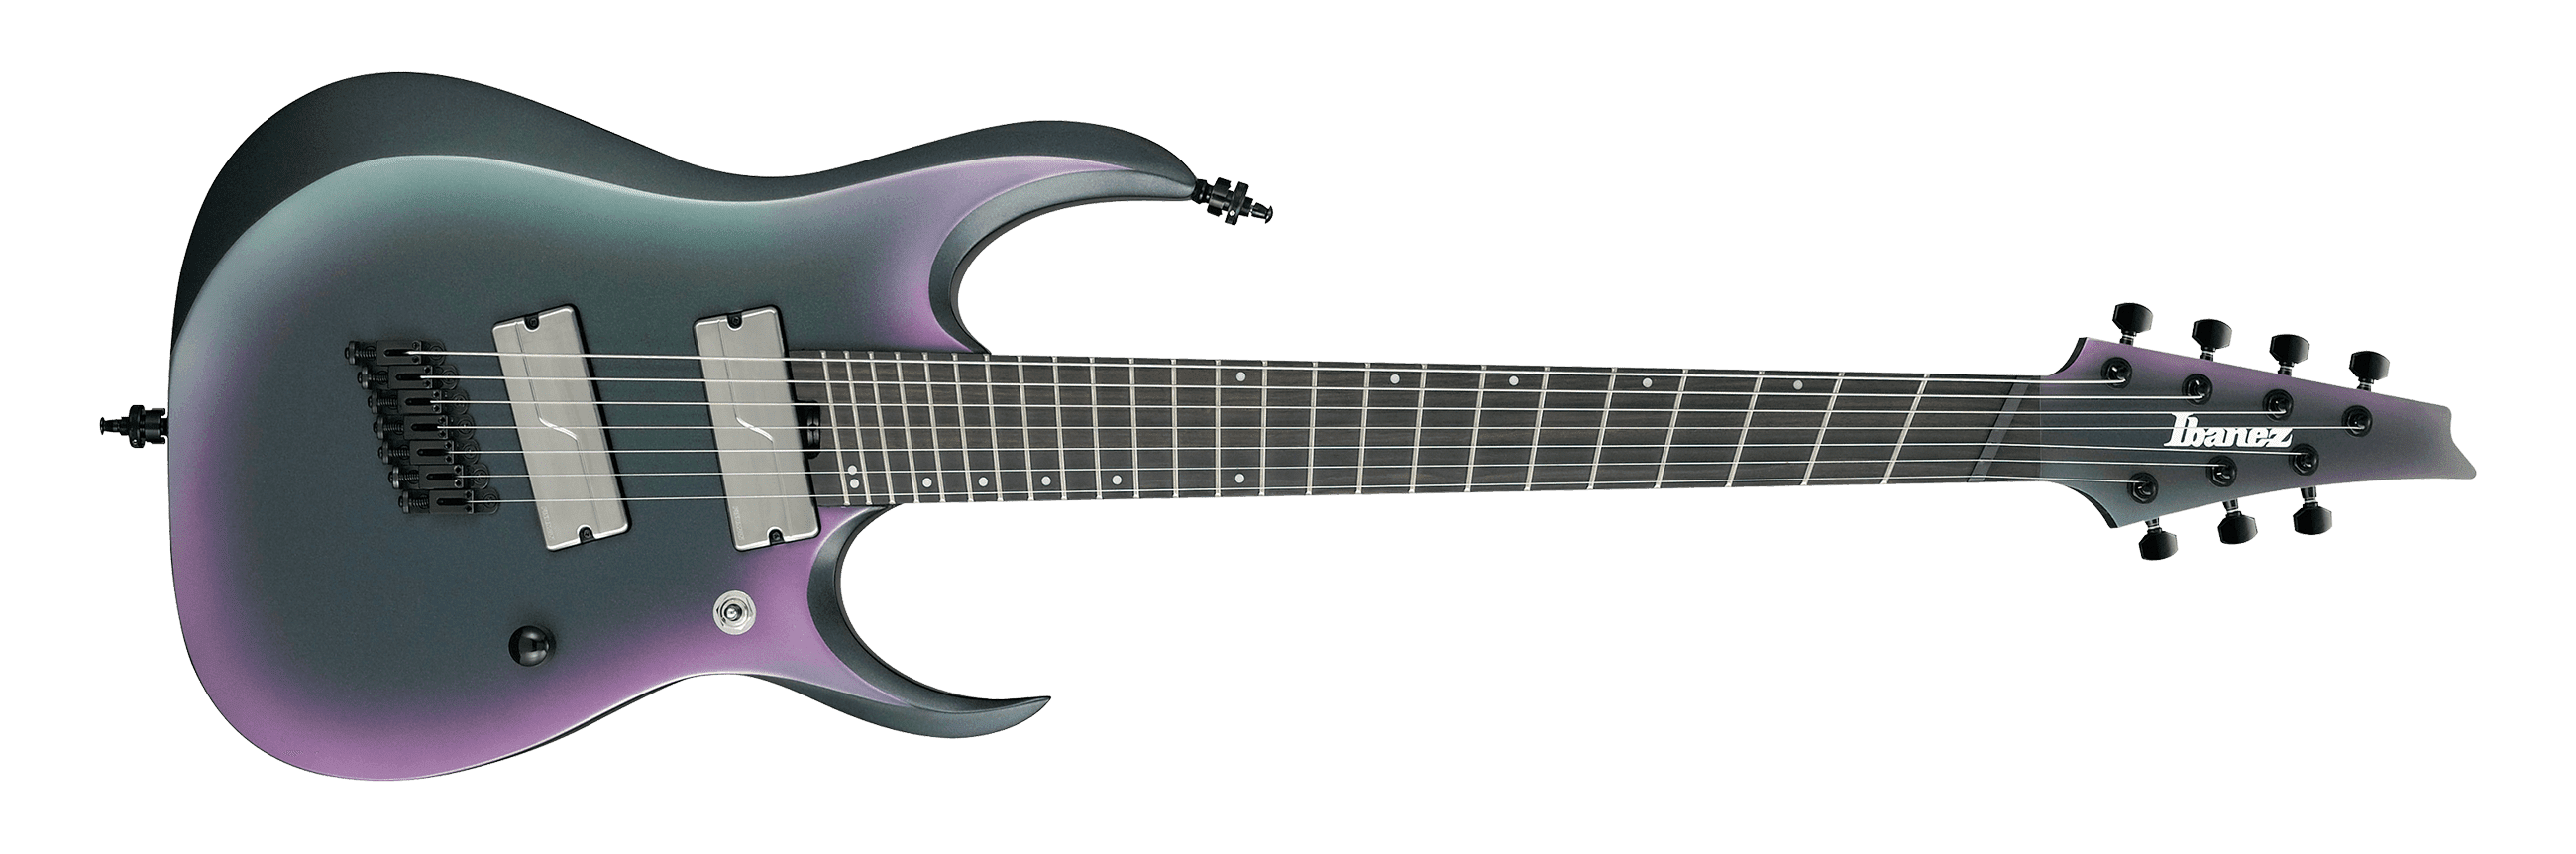 RGD Axion Label Guitars